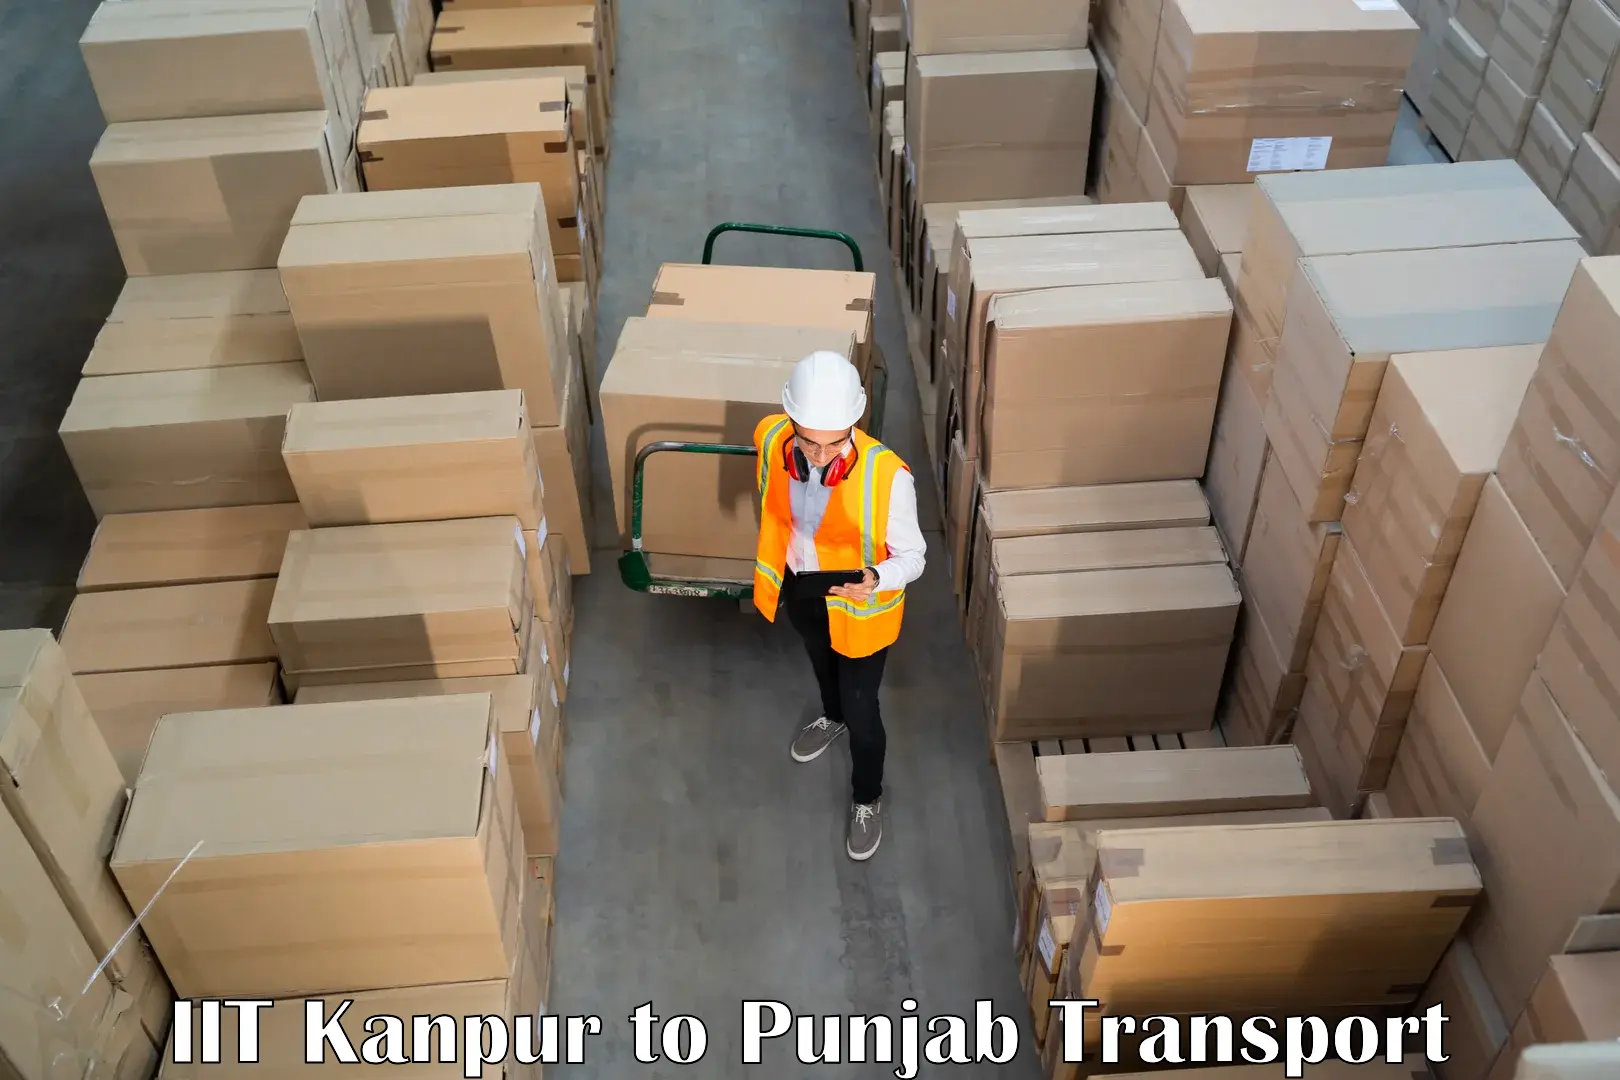 Nearby transport service IIT Kanpur to Talwara